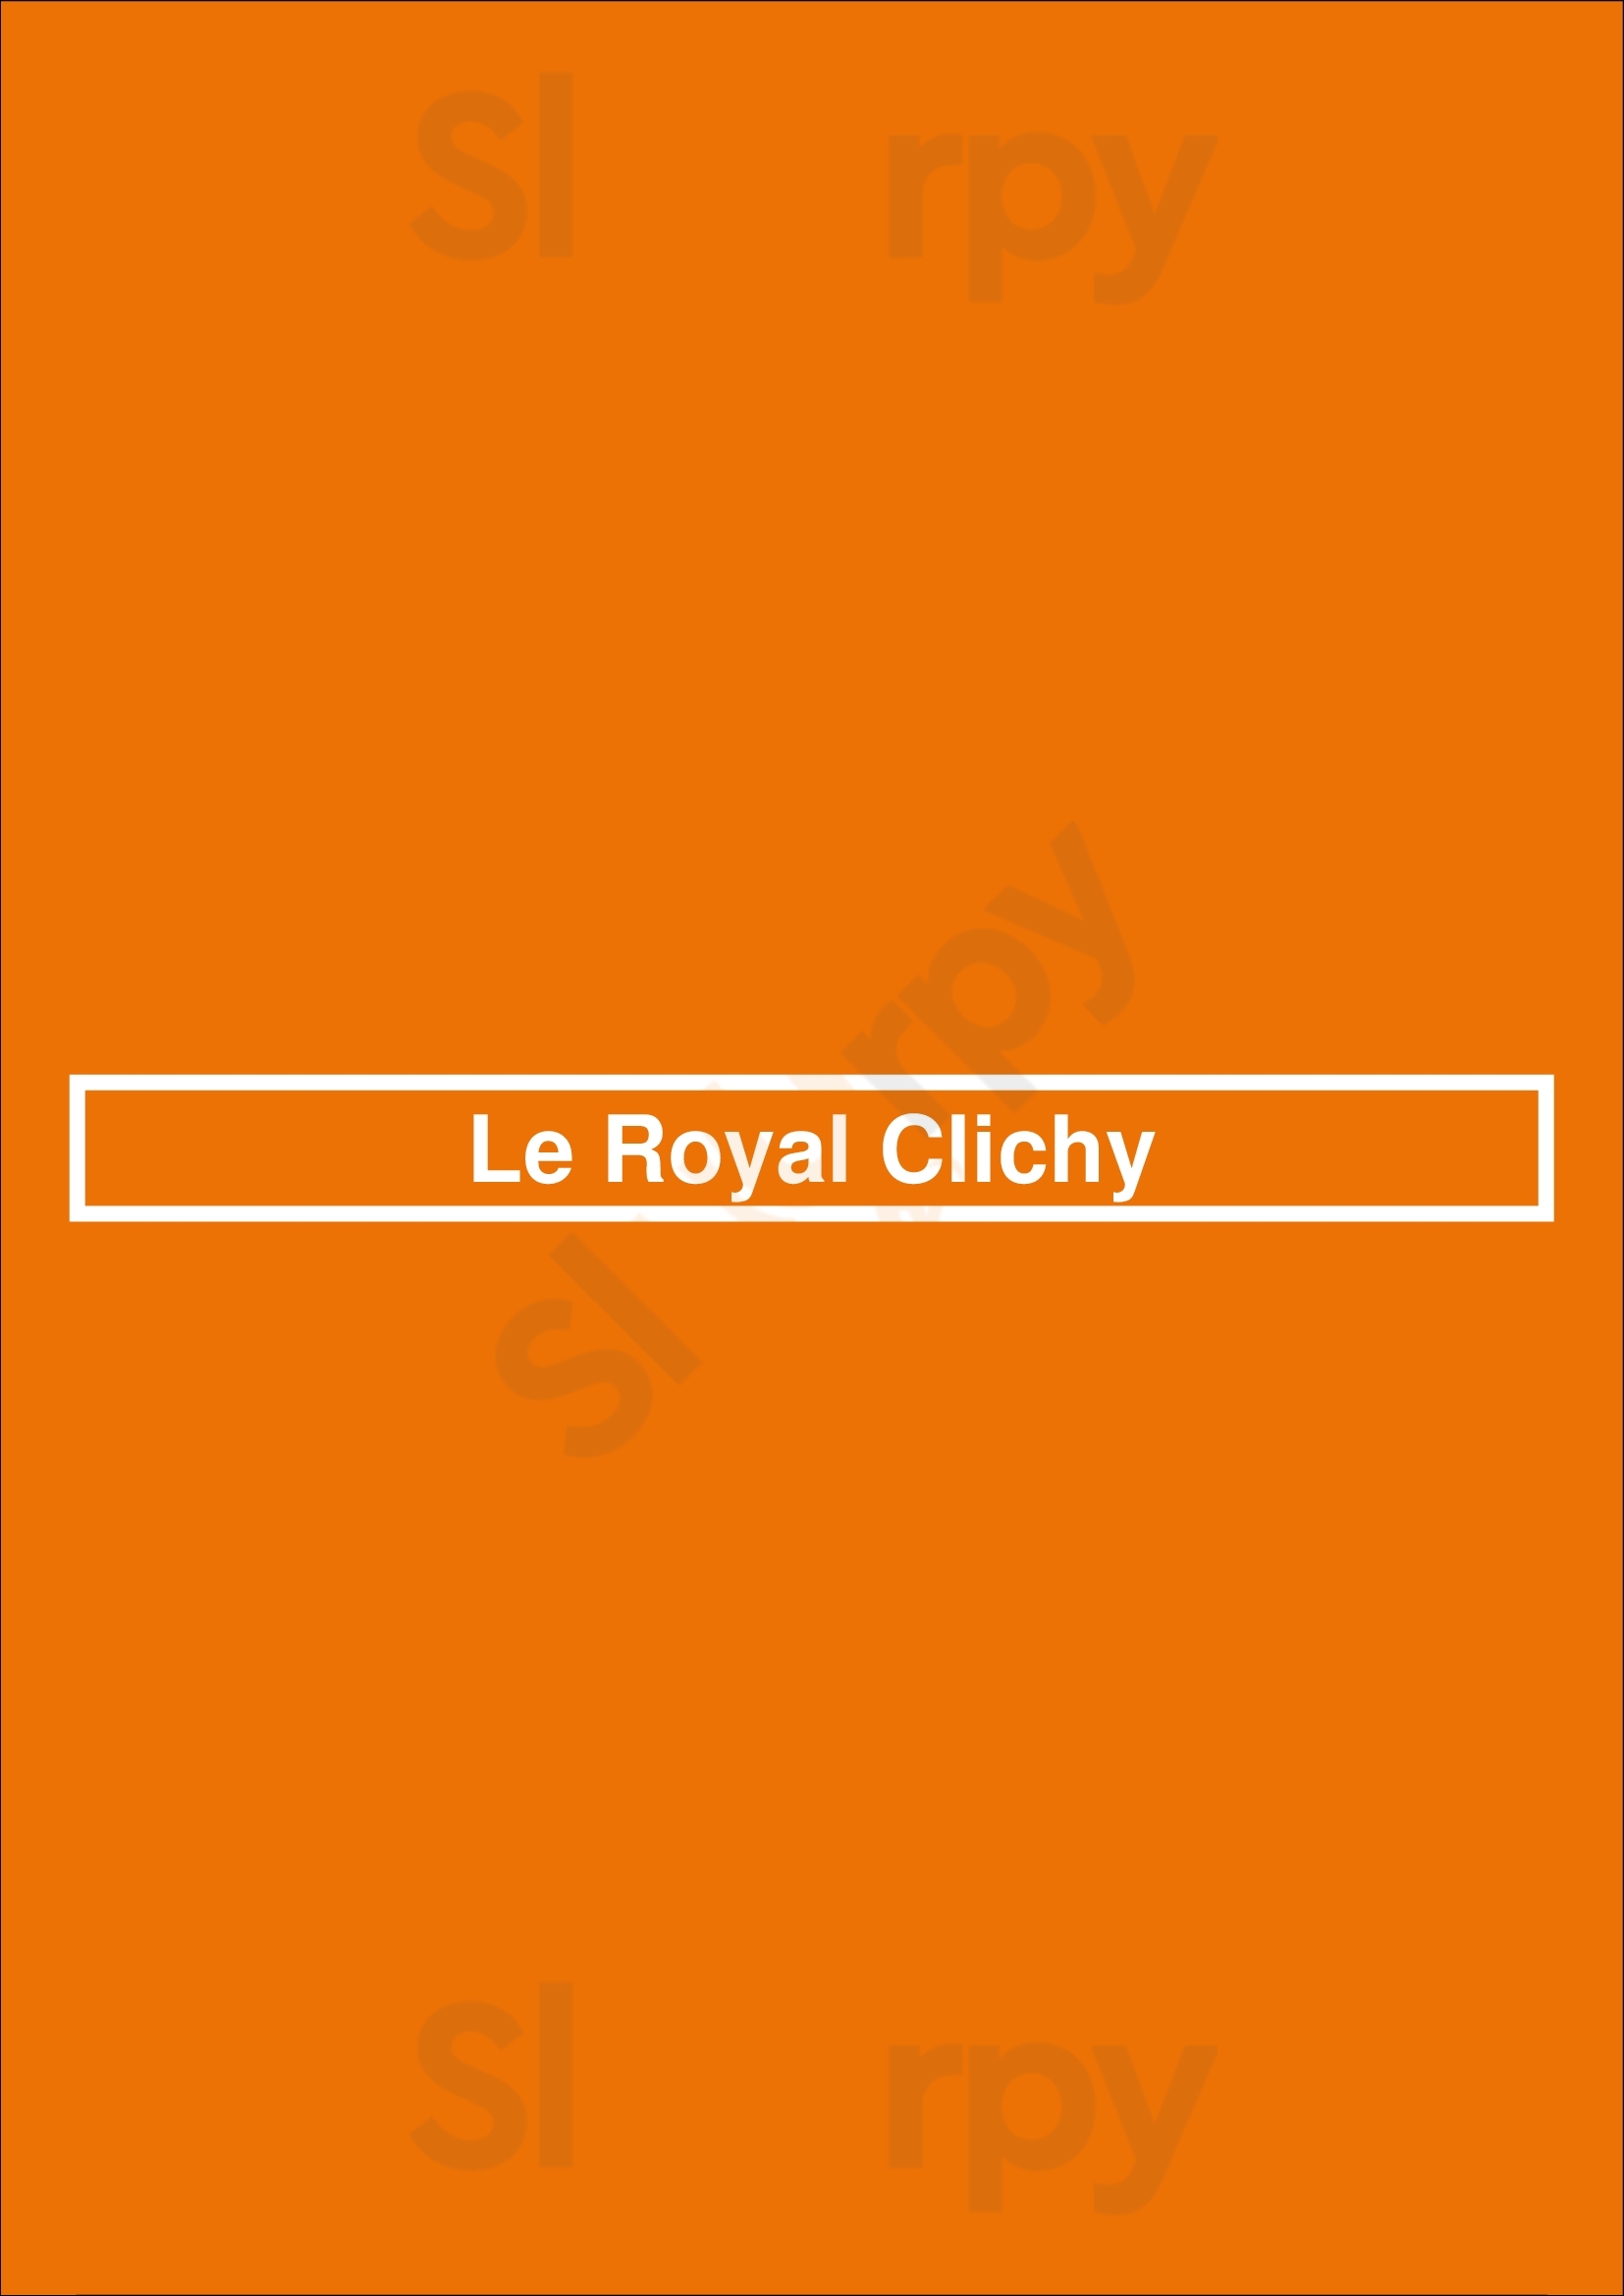 Le Royal Clichy Clichy Menu - 1